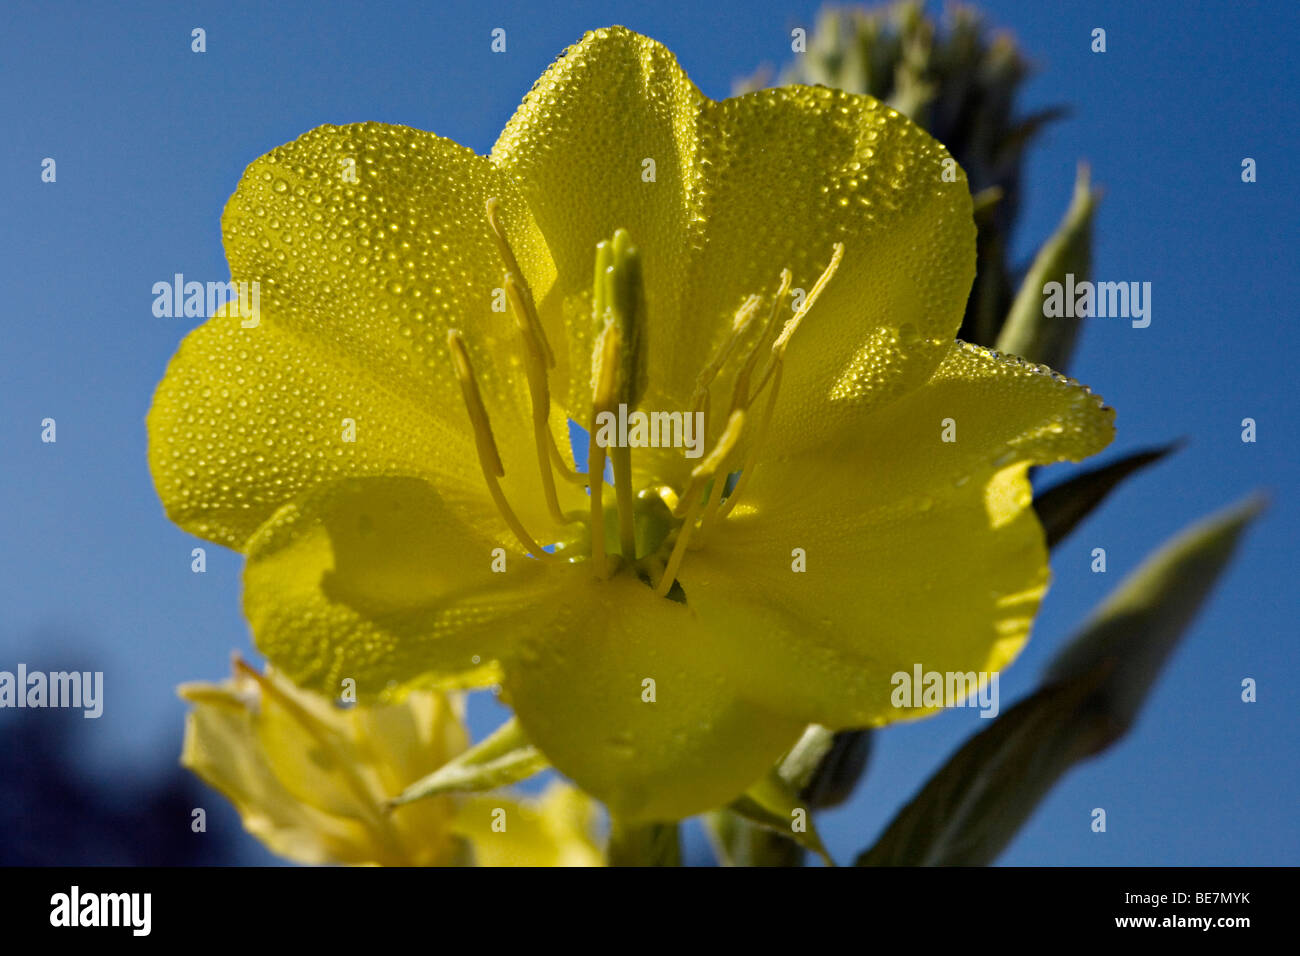 Oenothera biennis Evening primrose or Evening star flower in close-up Stock Photo